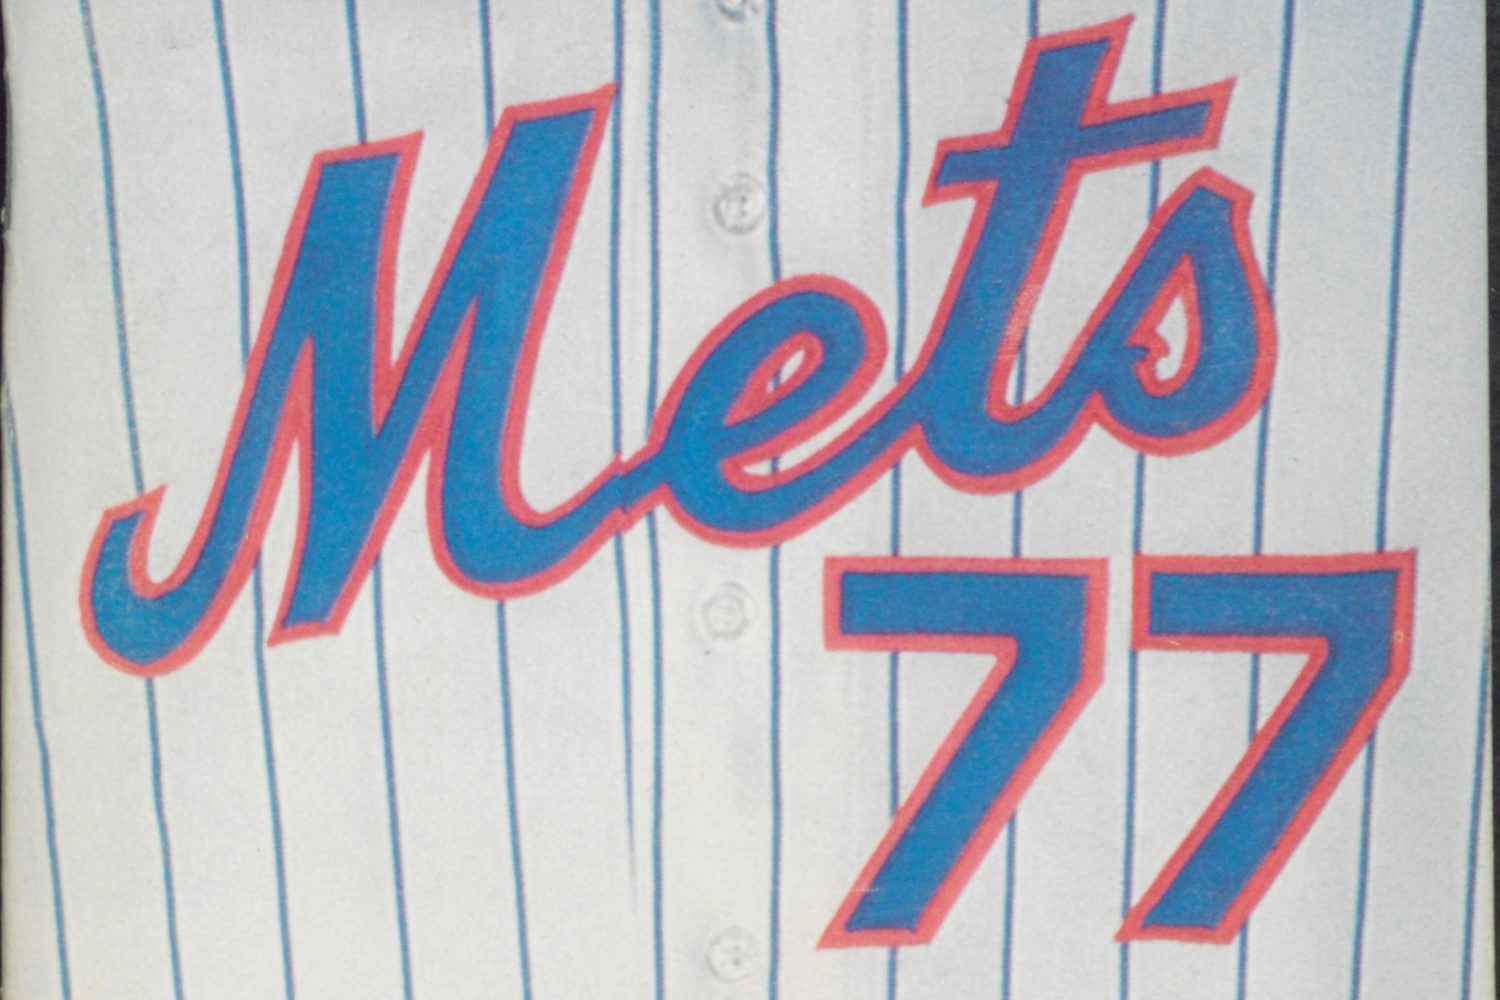 1977 Mets Press-Radio-TV Guide